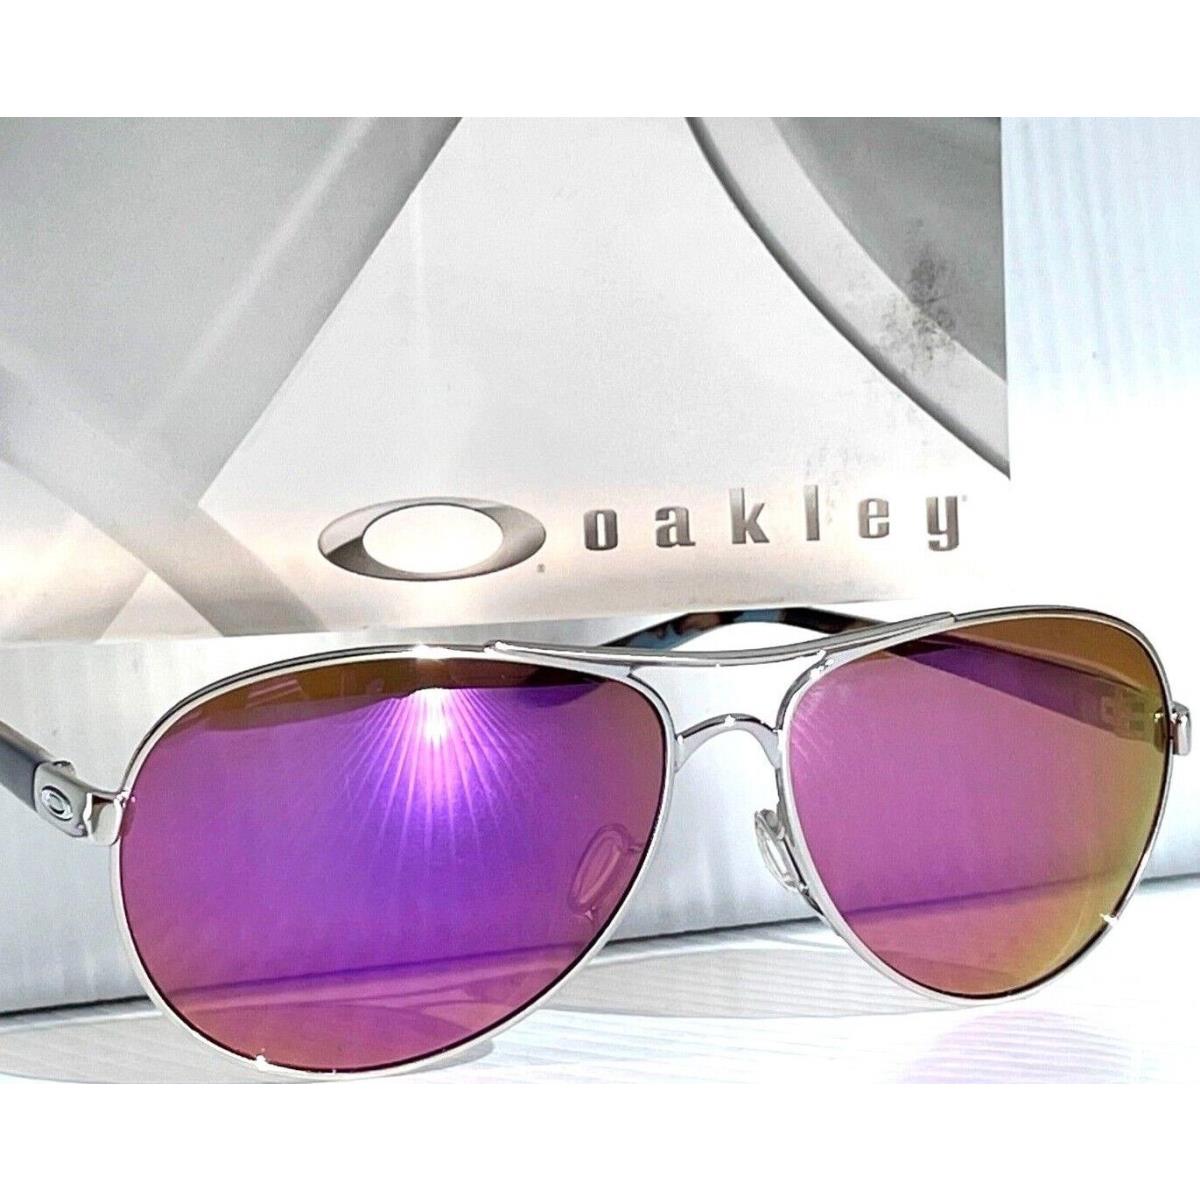 Oakley Feedback Chrome Aviator Galaxy Polarized Purple Pink Sunglass 4079